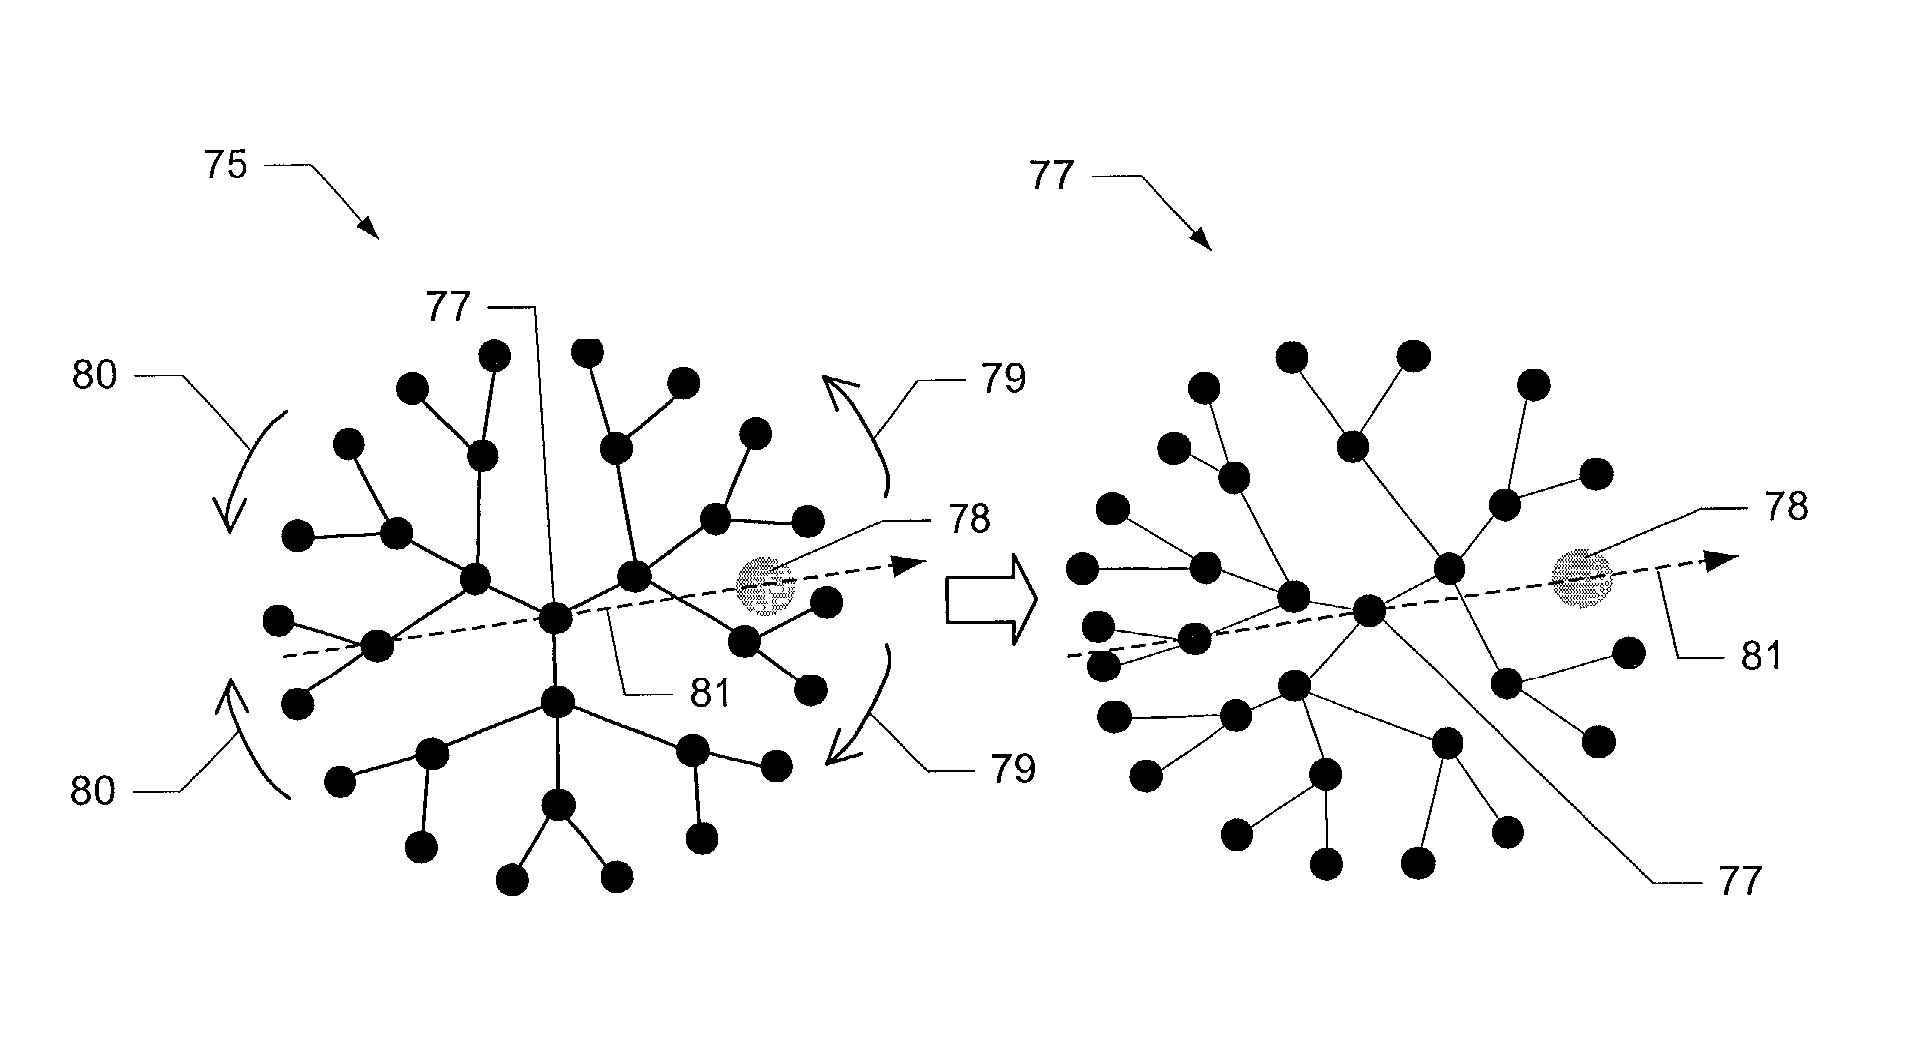 Computer-implemented node spreader